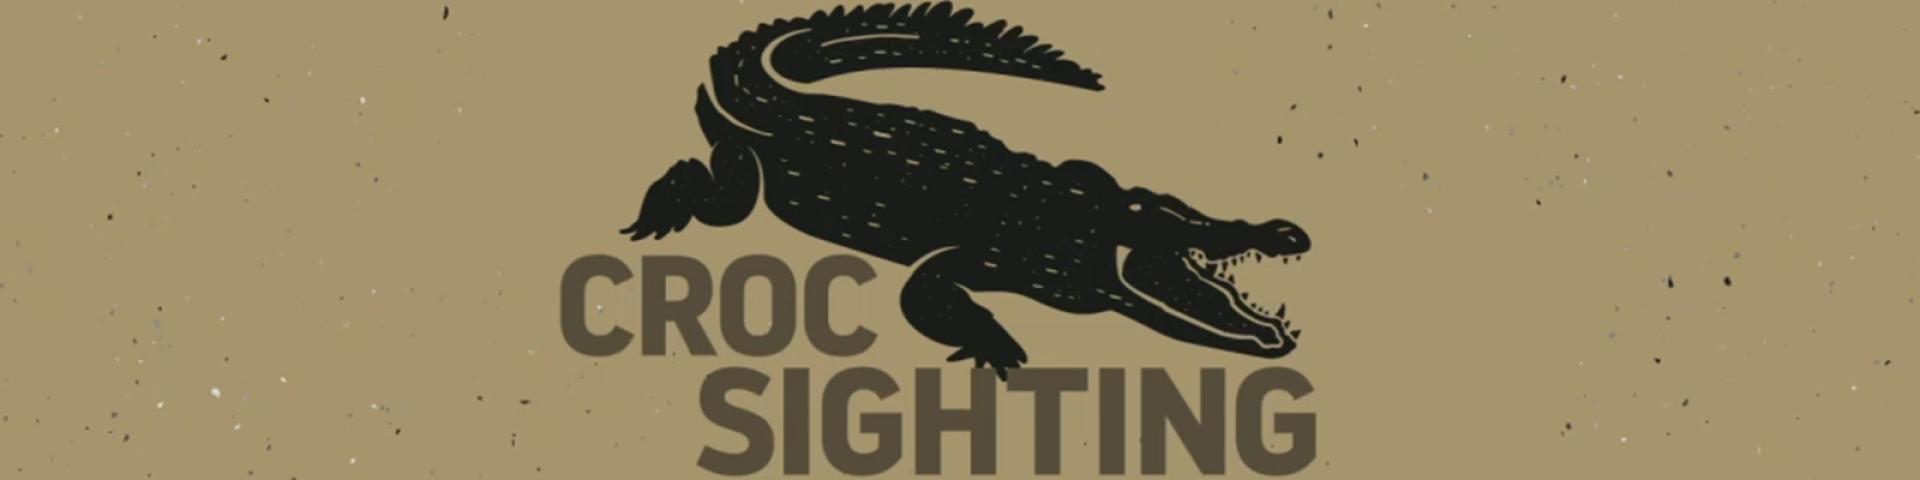 Crocodile sighting 